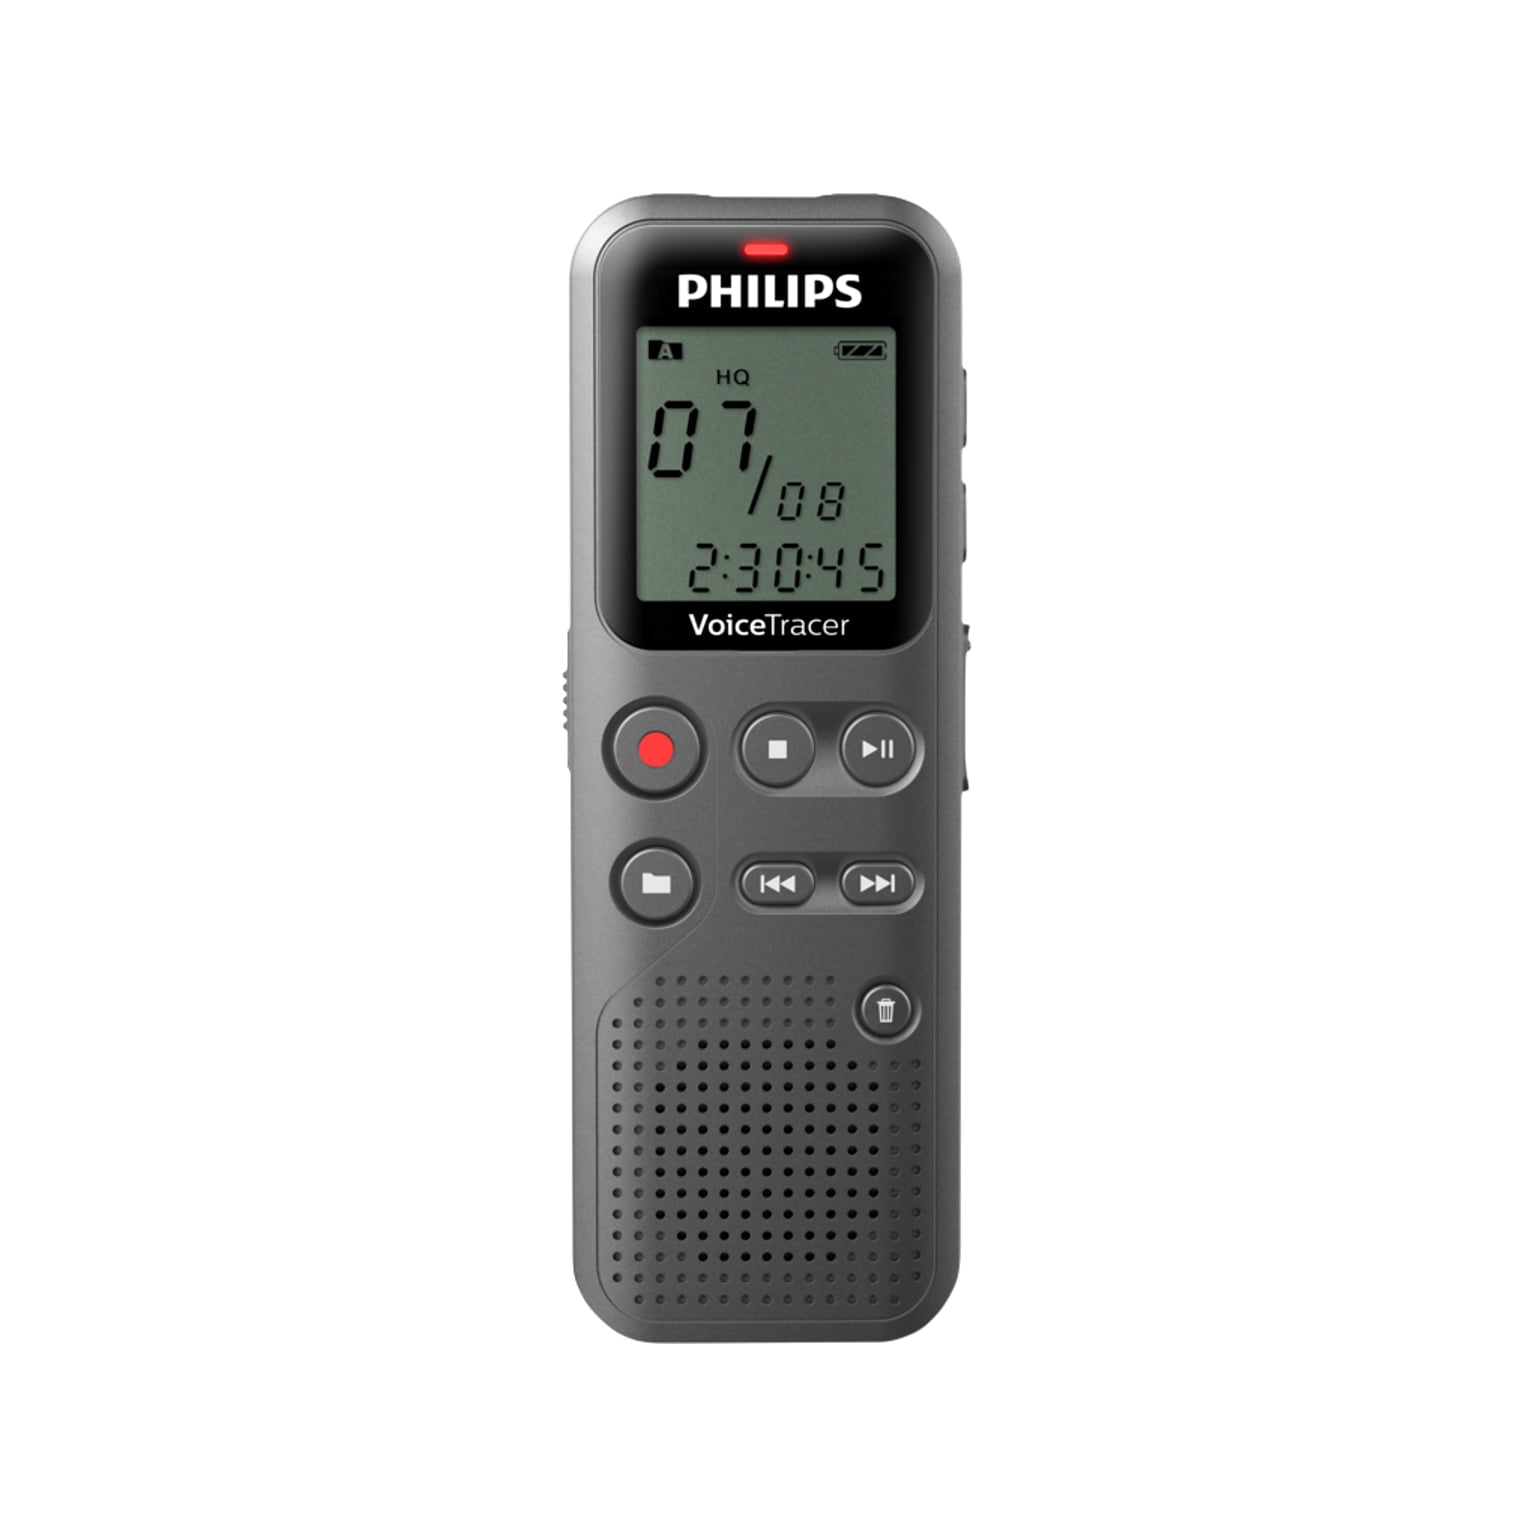 Philips VoiceTracer Digital Voice Recorder, 8GB, Black (DVT1120) | Quill.com